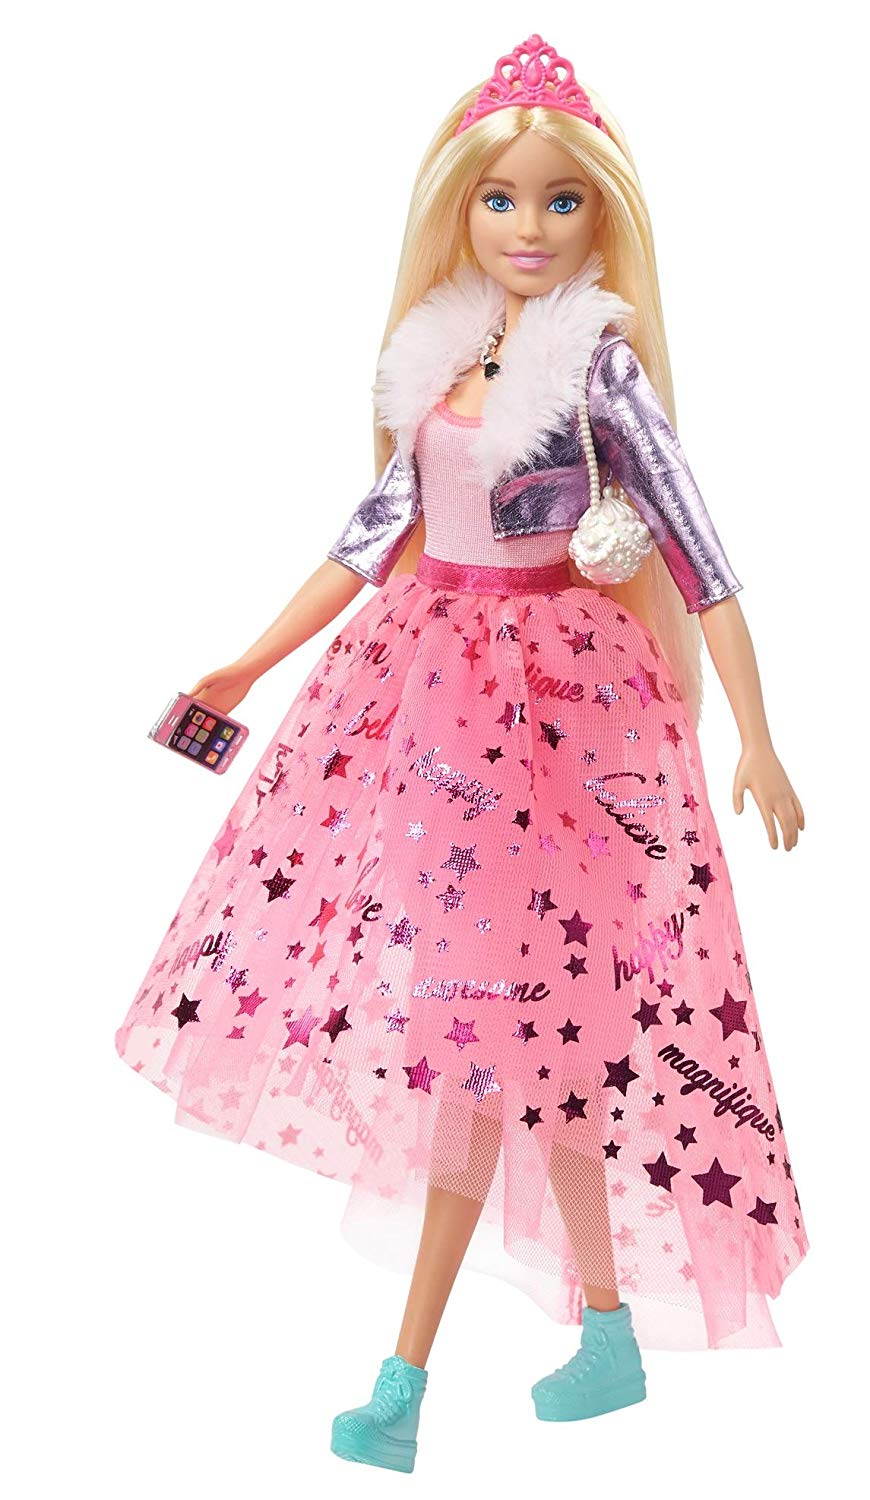 Barbie Princess Adventure doll 2020